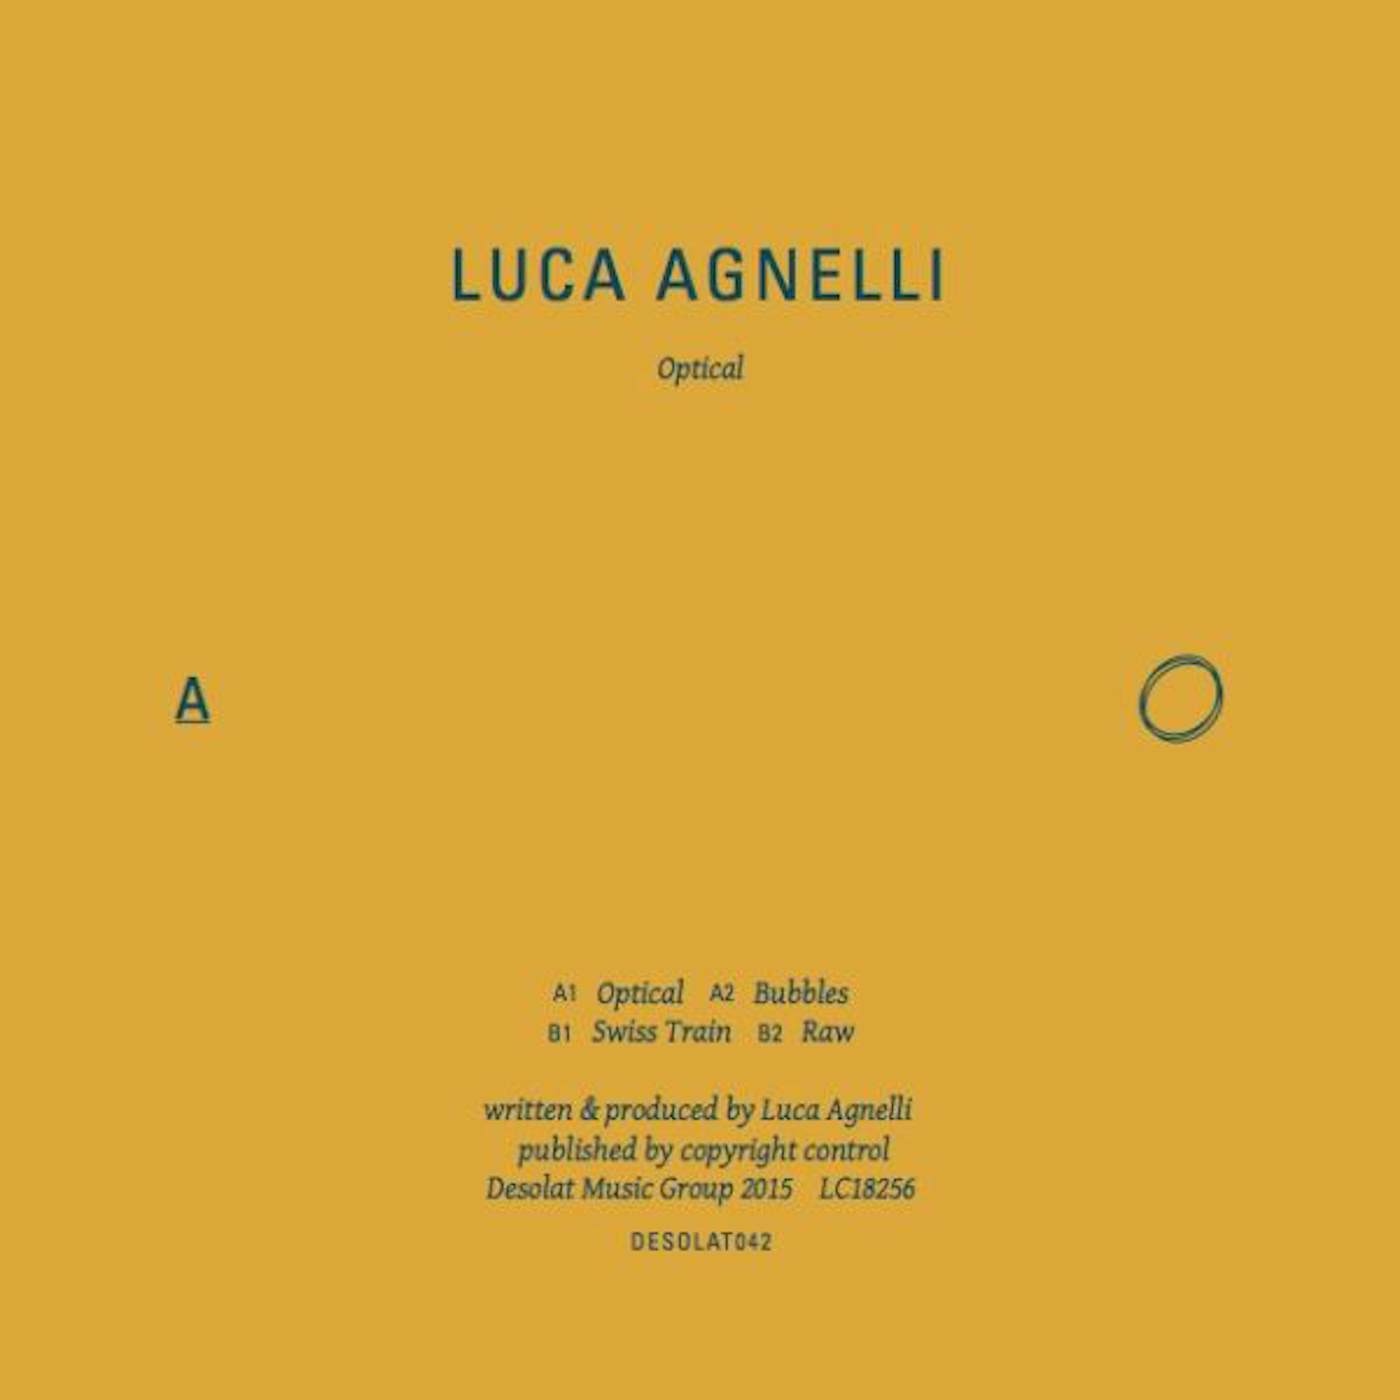 Luca Agnelli Optical Vinyl Record